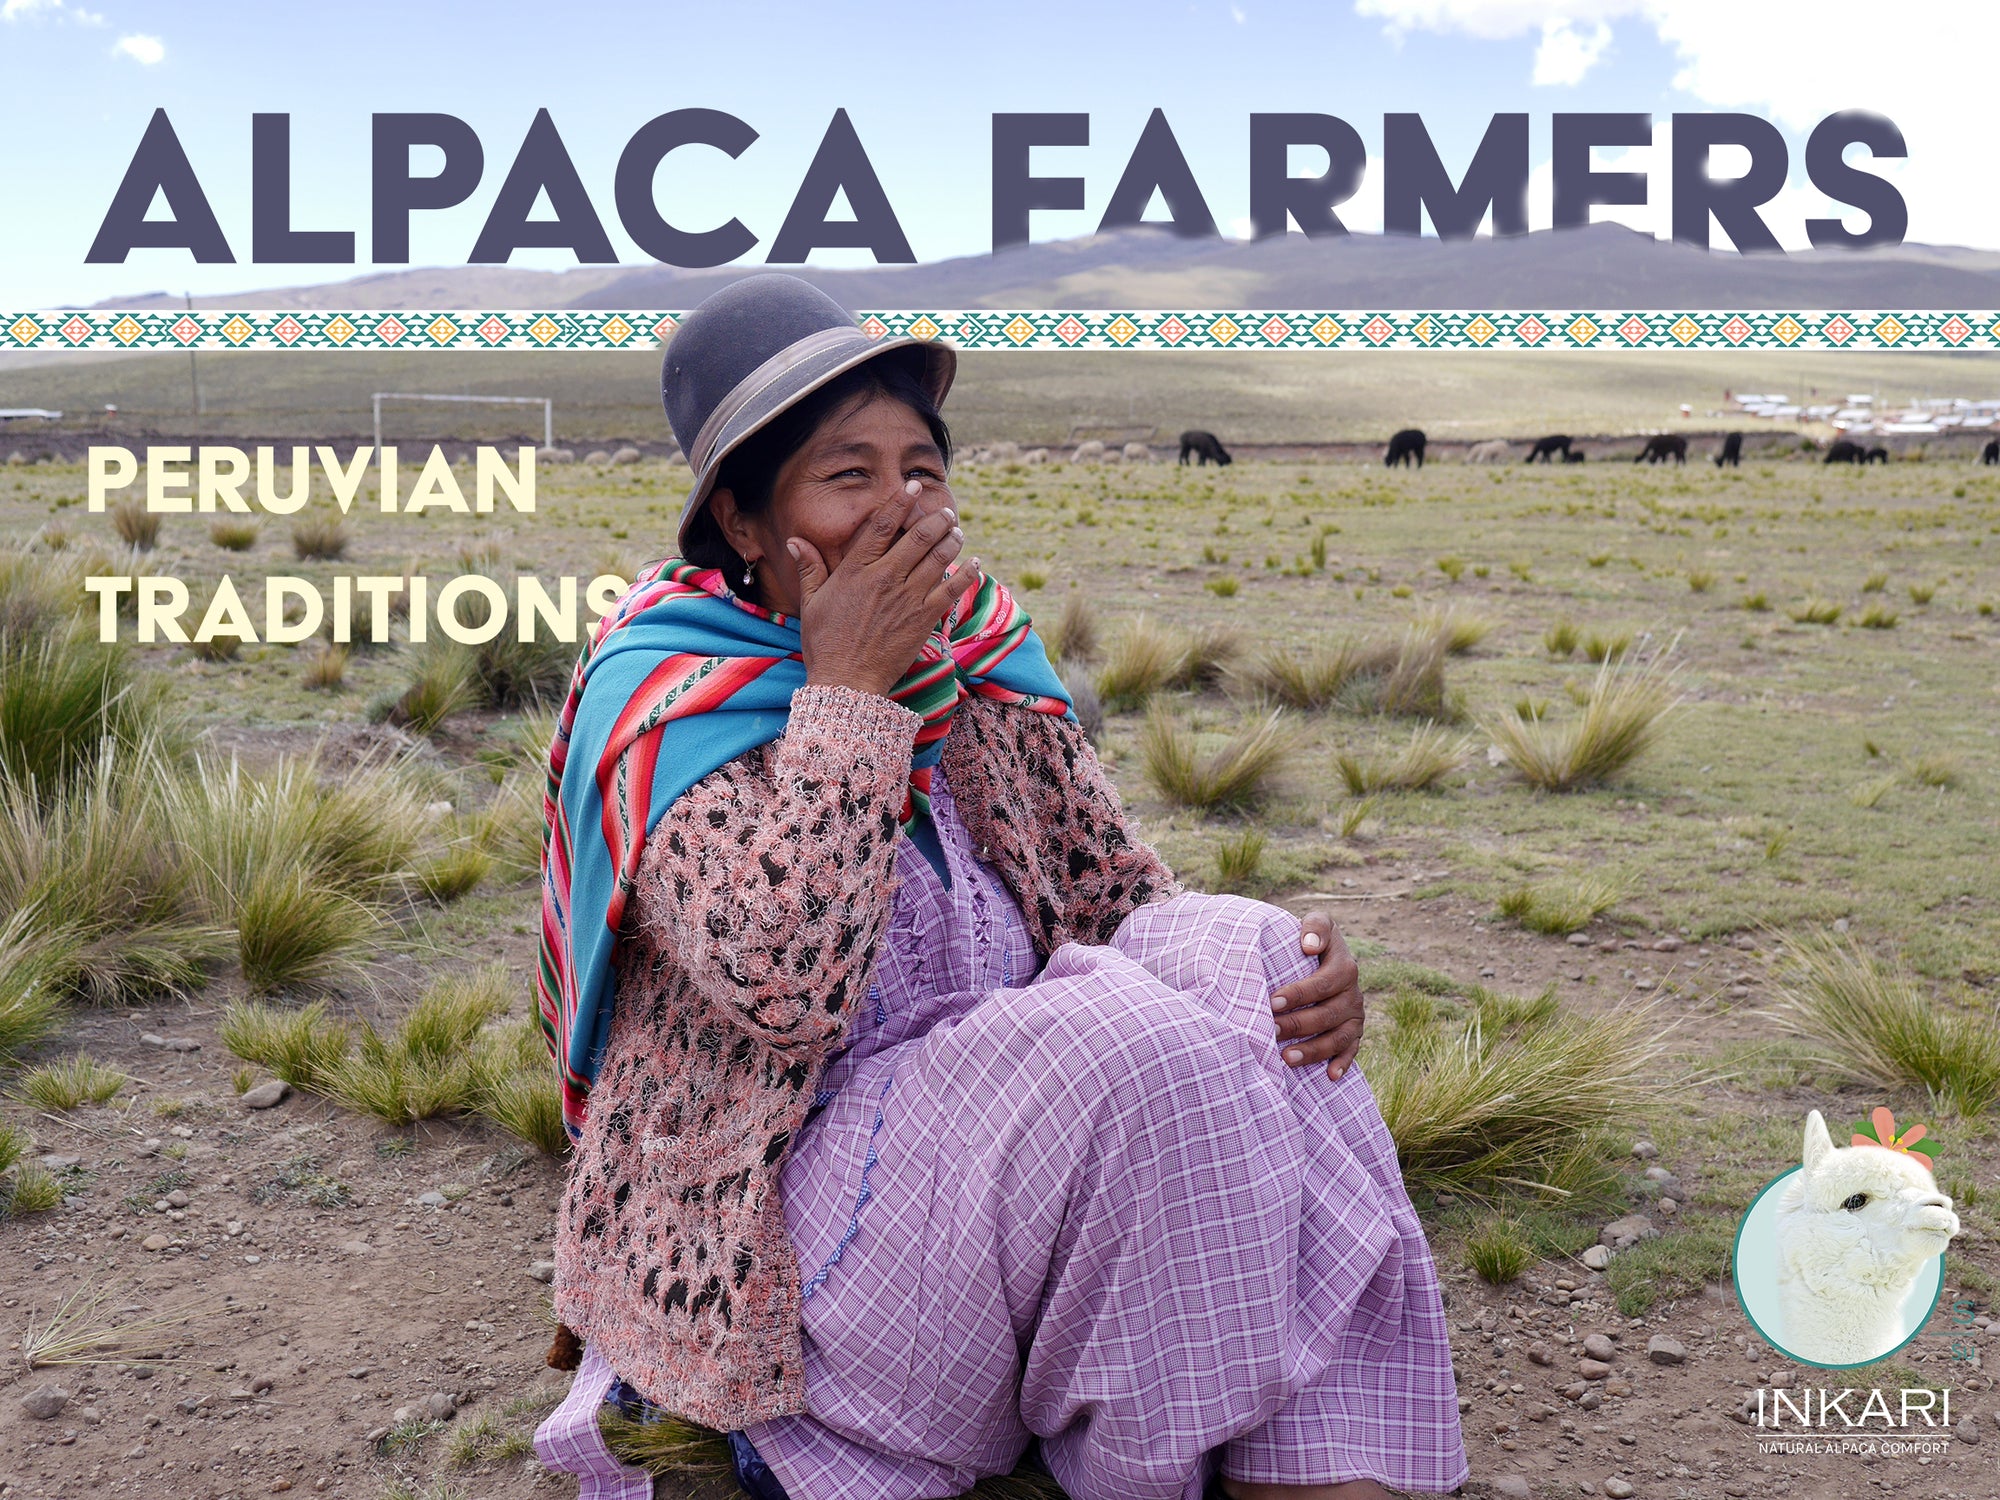 How do alpaca farmers honor ancient Peruvian traditions?